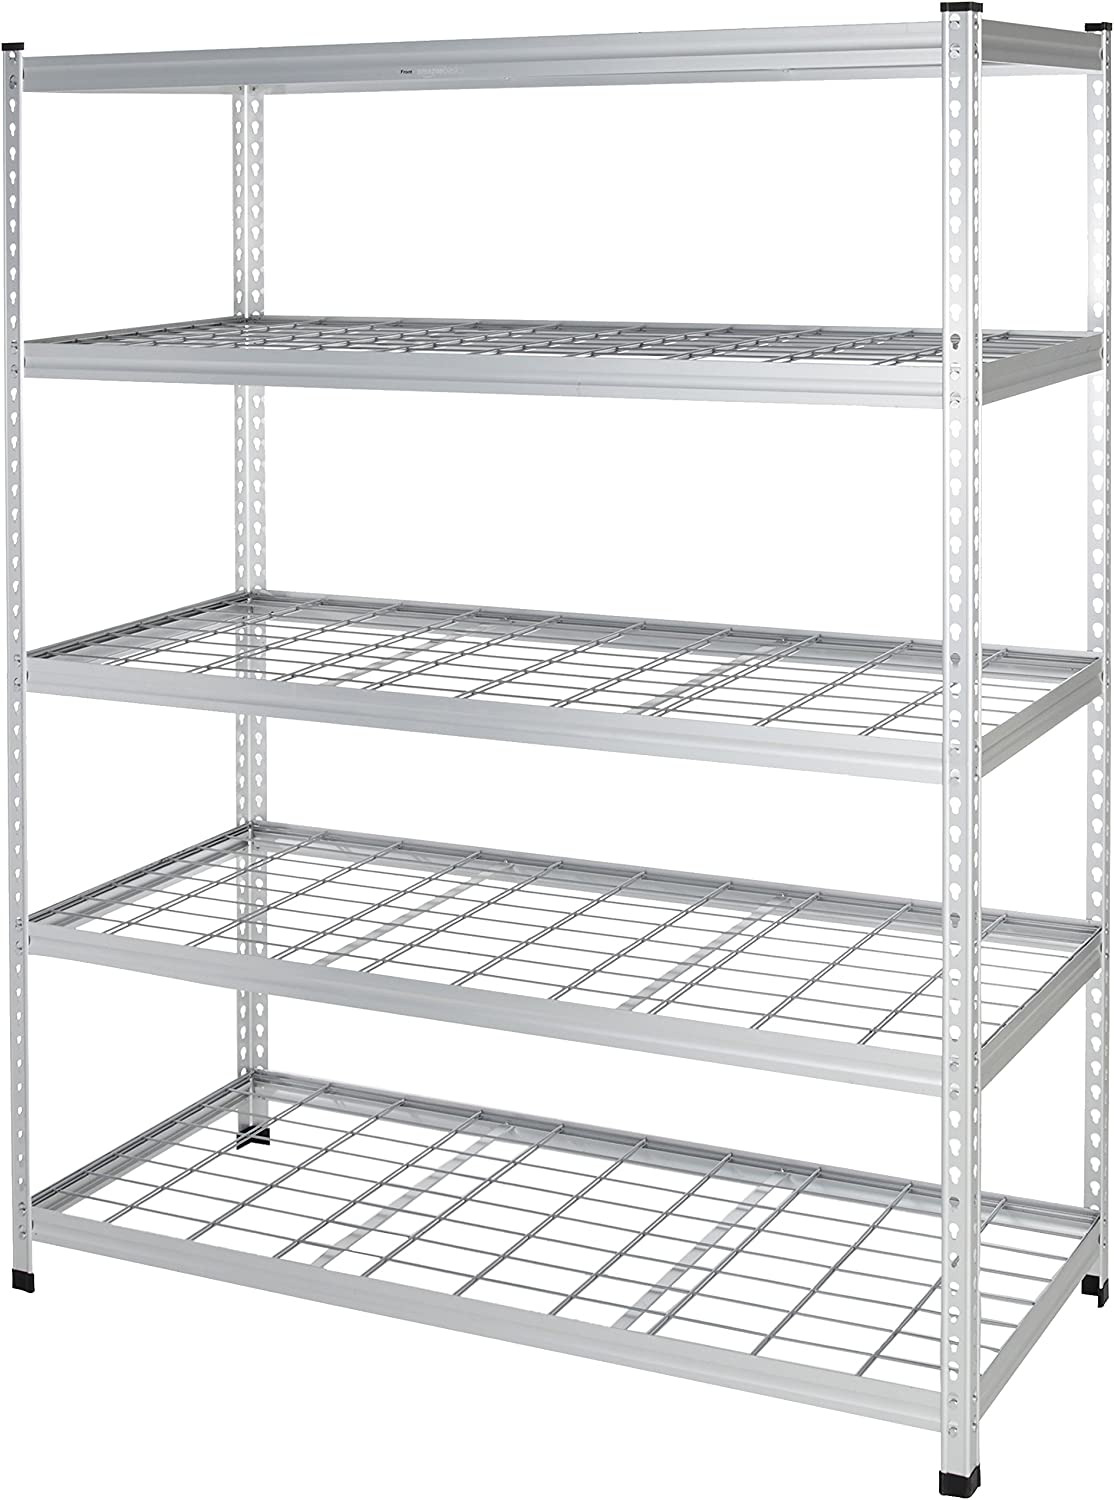 Amazon Basics Heavy Duty Storage Shelving Unit, Double Post, 5 Shelf, High-Grade